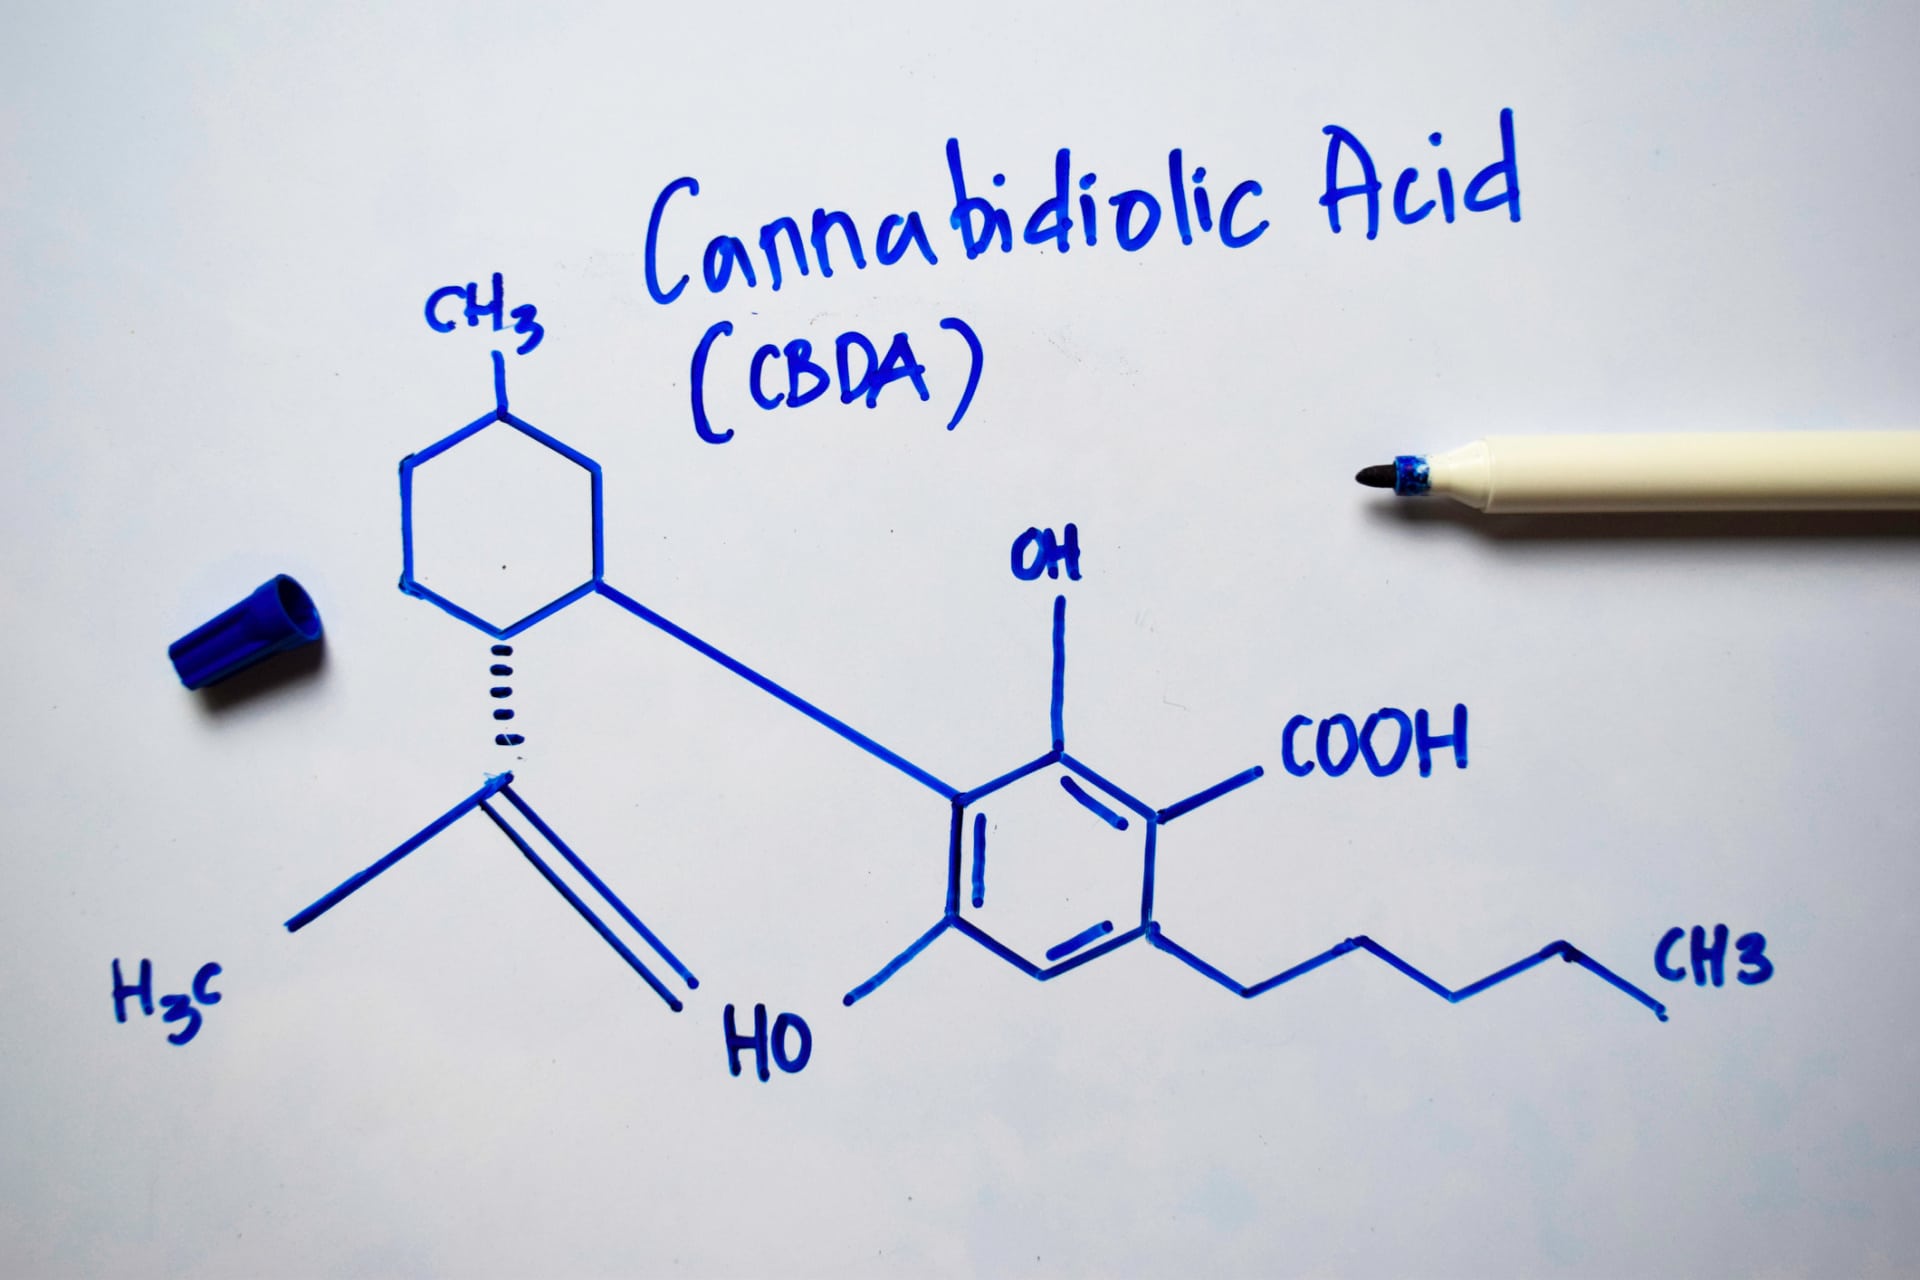 Whiteboard drawing of CBDA’s molecular structure